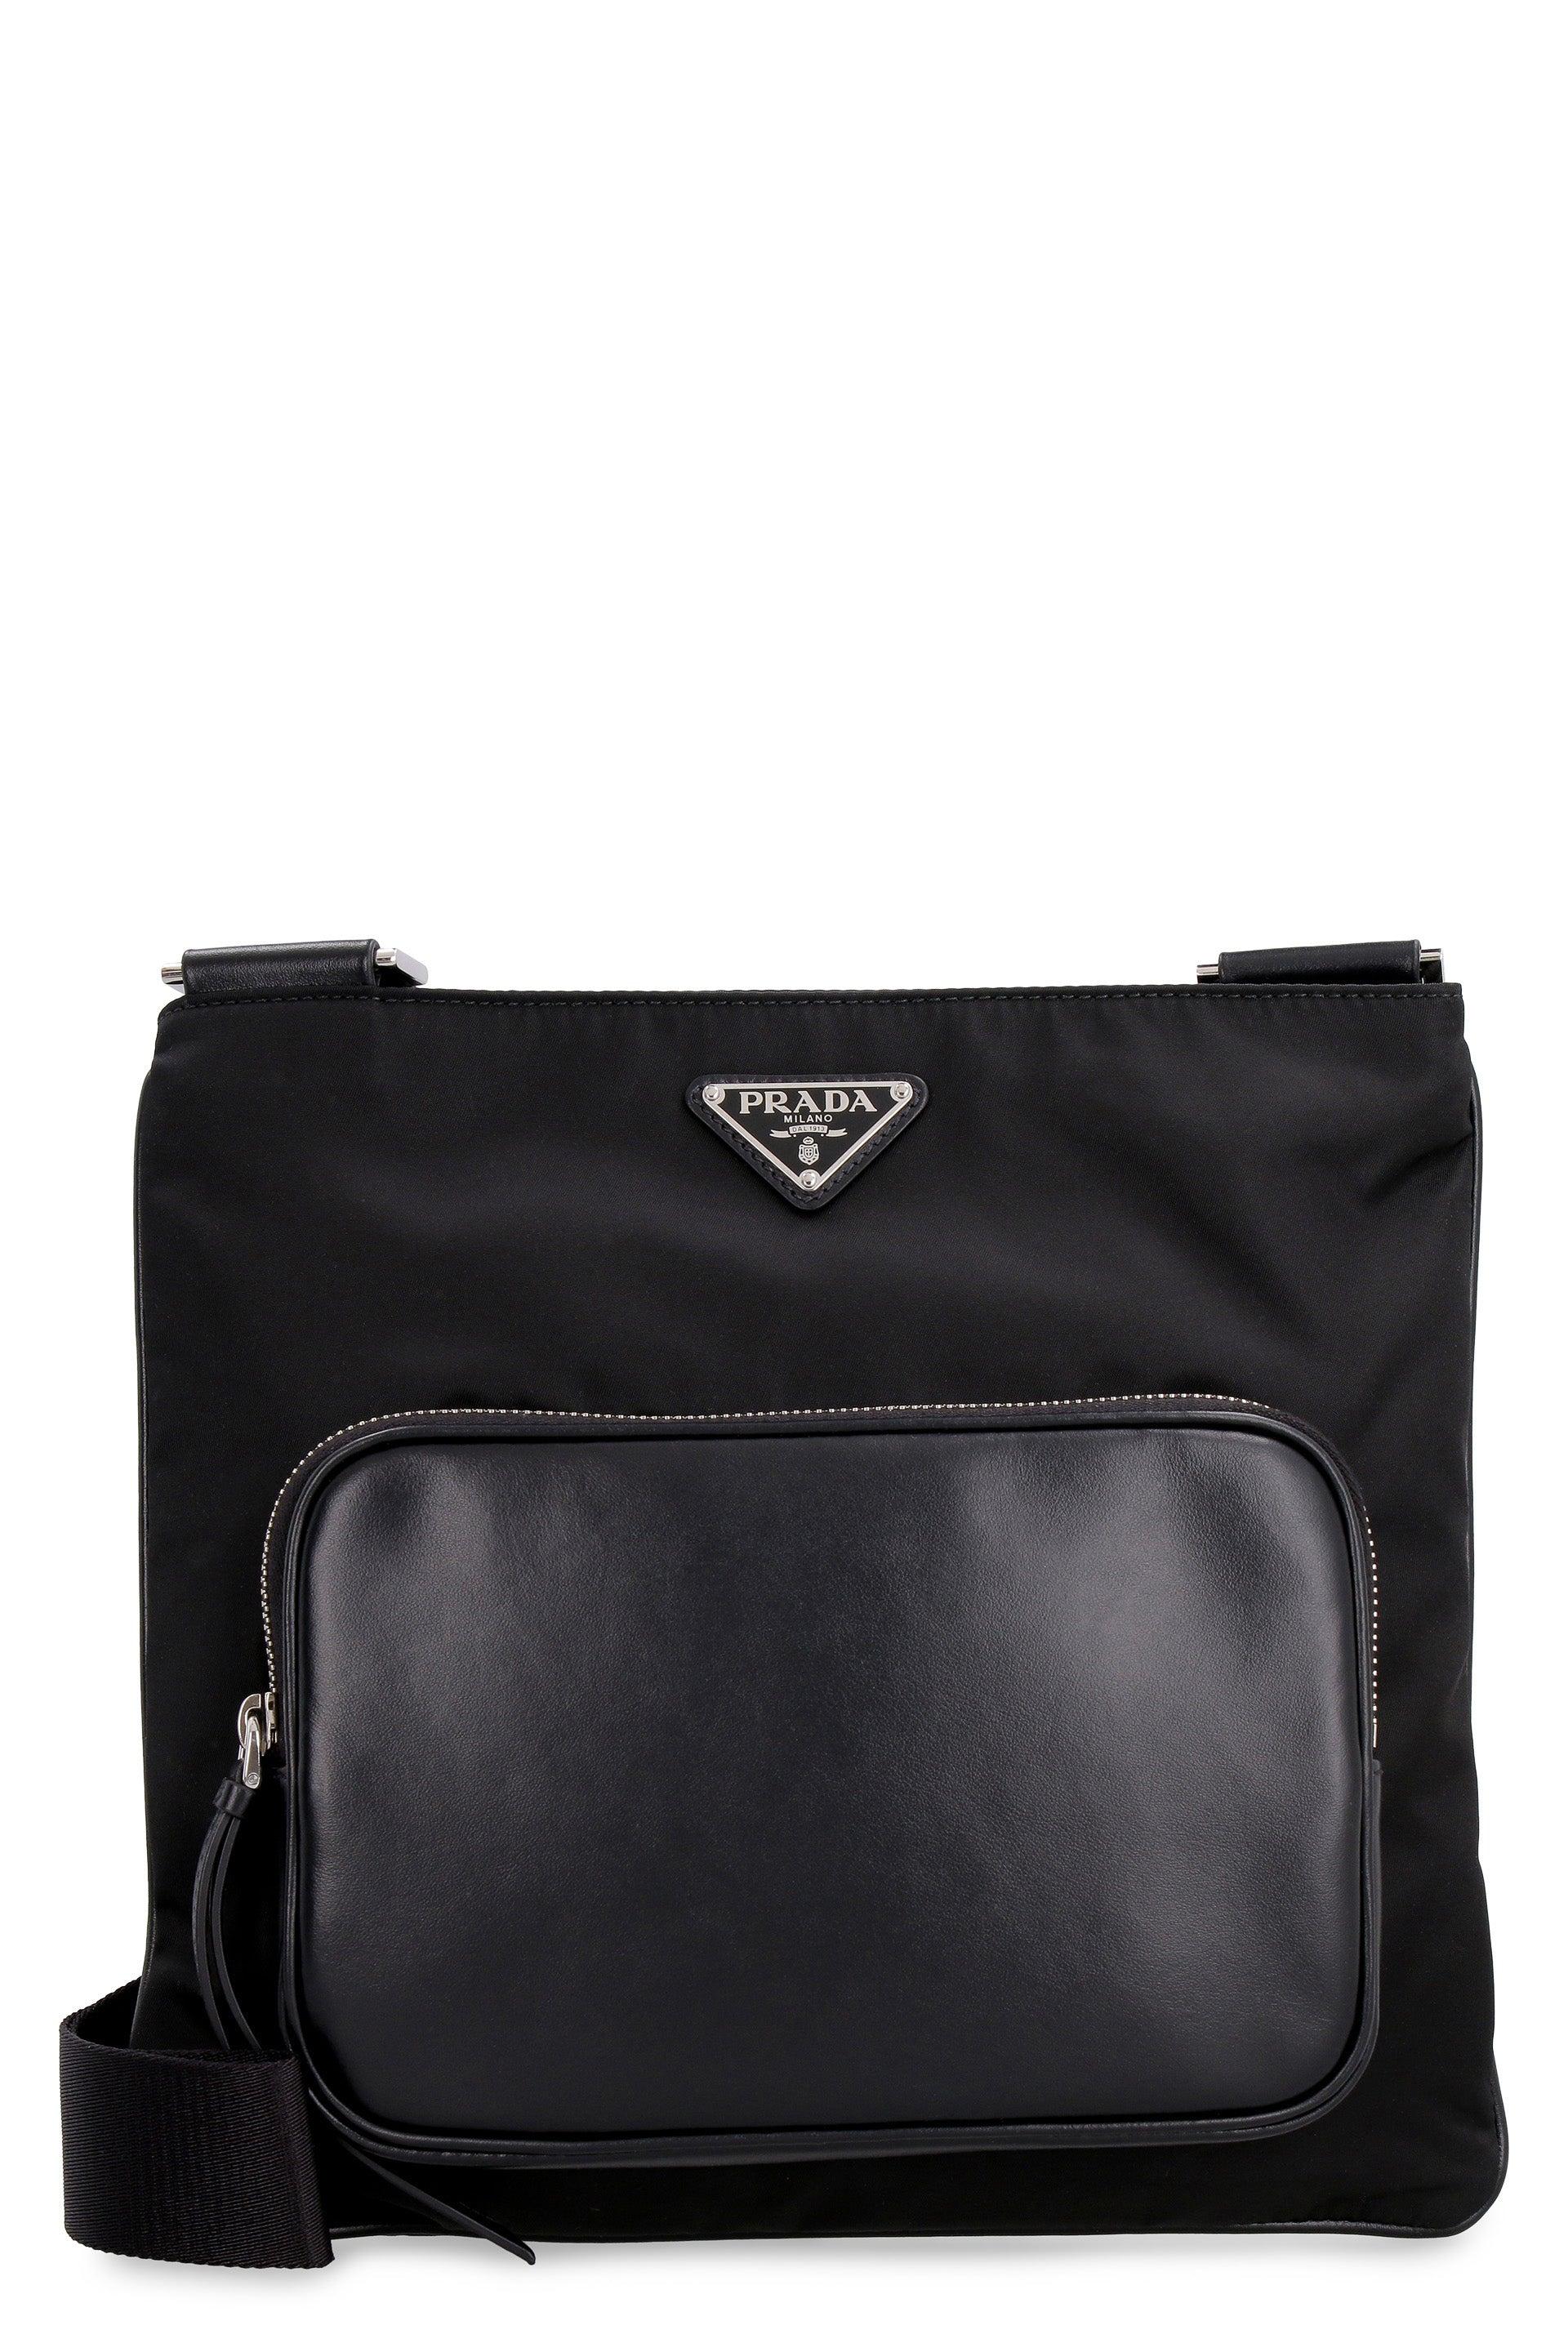 Prada Messenger Bag With Logo in Black for Men | Lyst